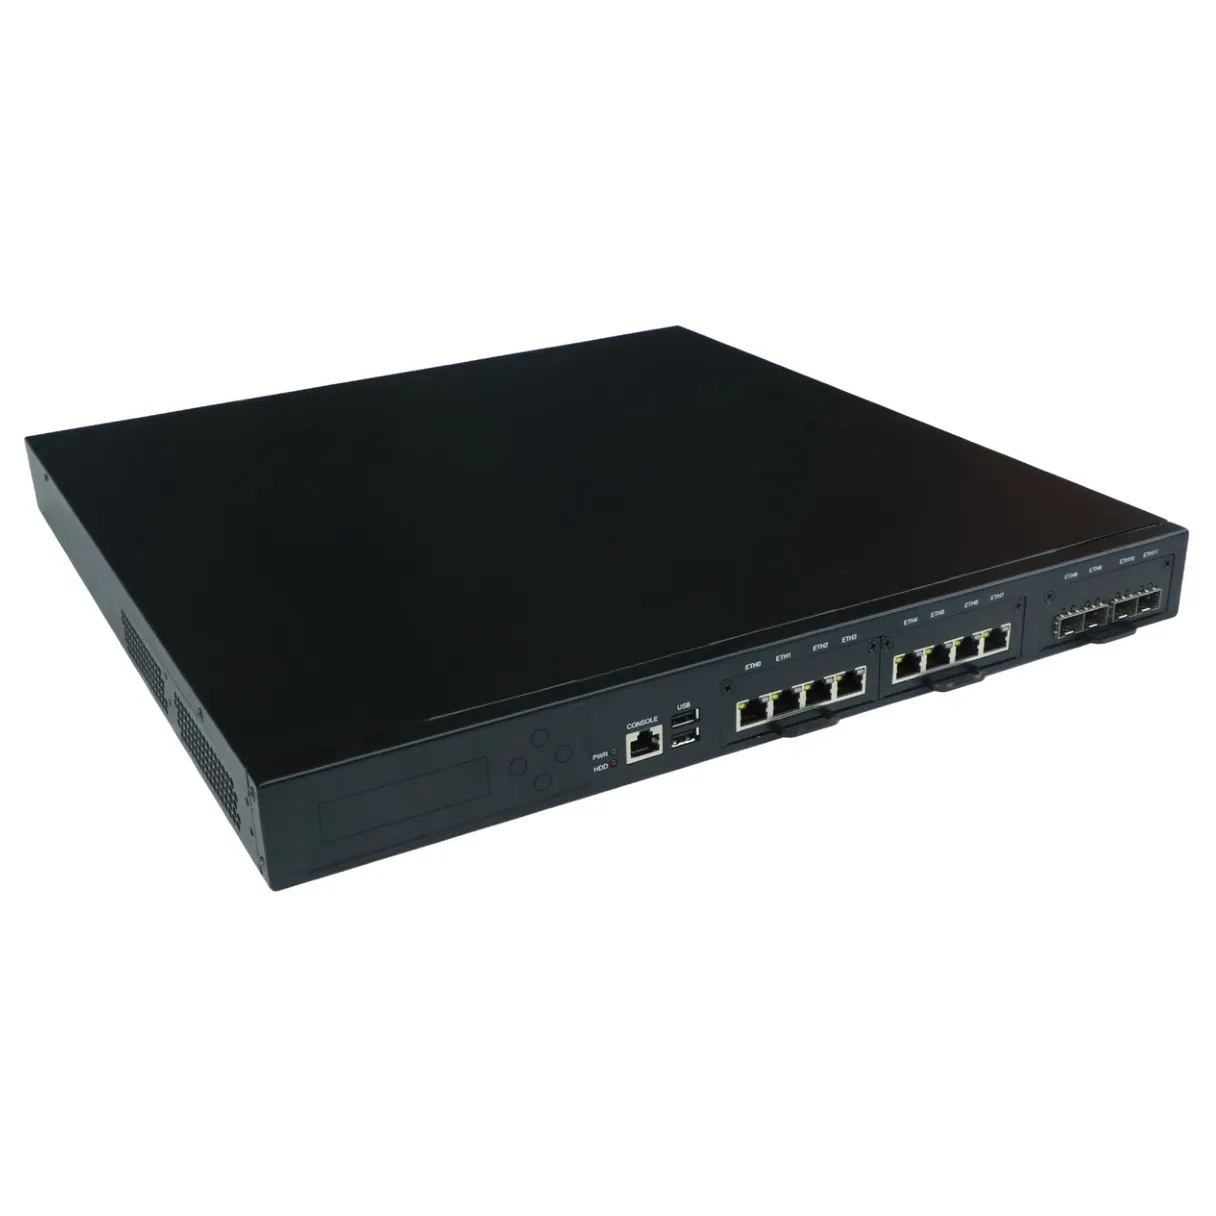 Phytium FT-2000/4 CPU IPC 8 LAN Firewall Soft Route Server 1U Network Ups Power Conditioner PC 4G Sim Card Industrial Computer